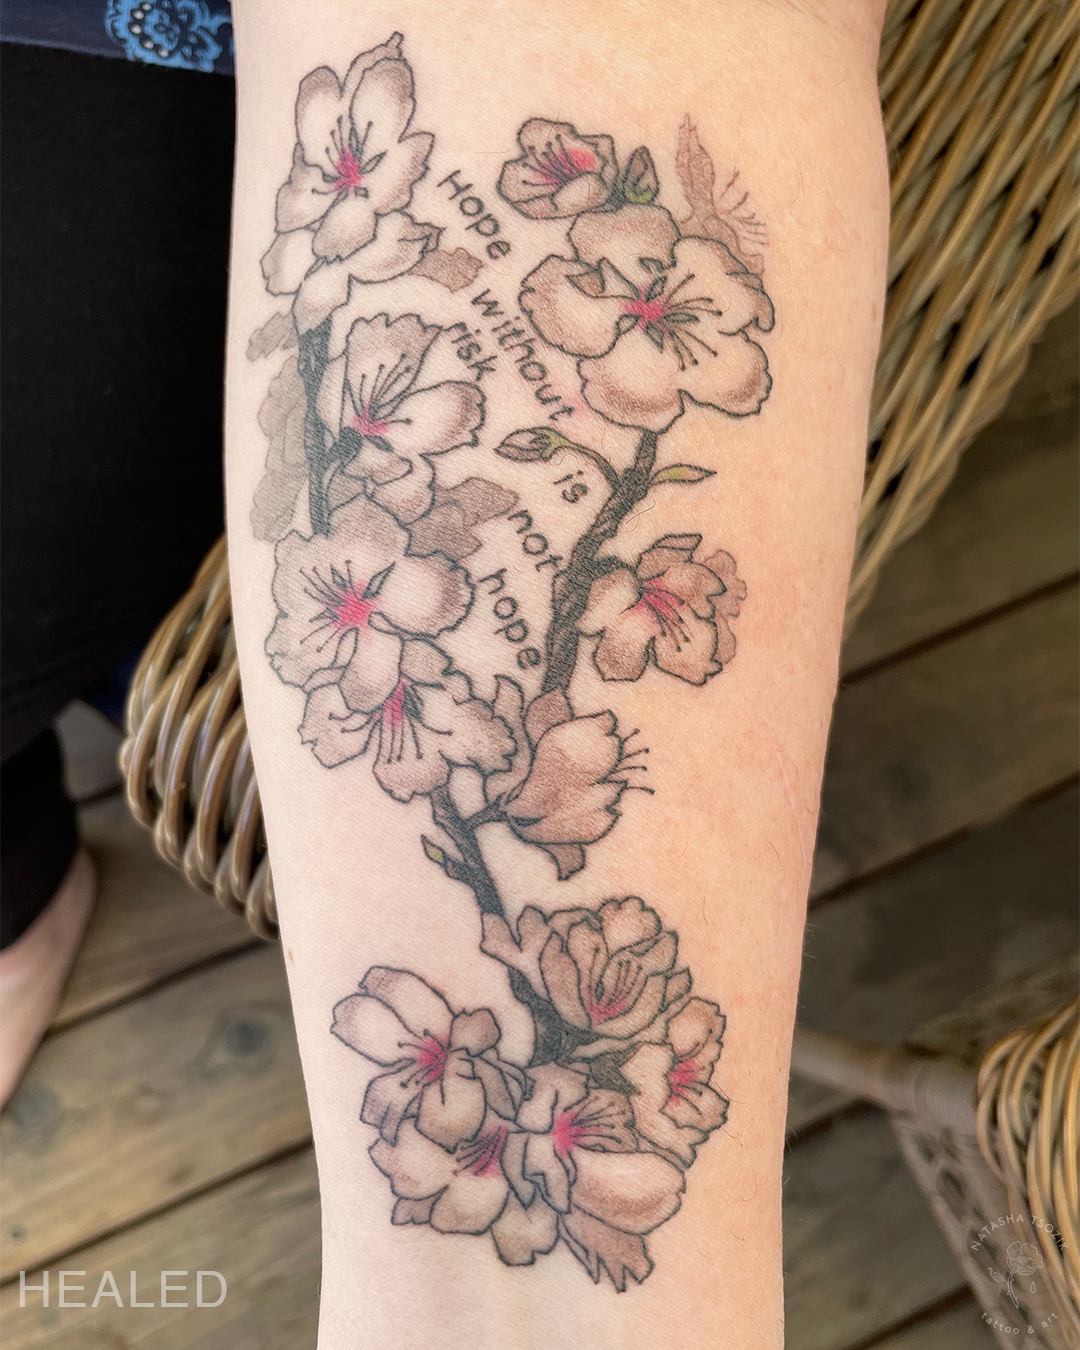 Healed cherry blossom tattoo on a forearm.